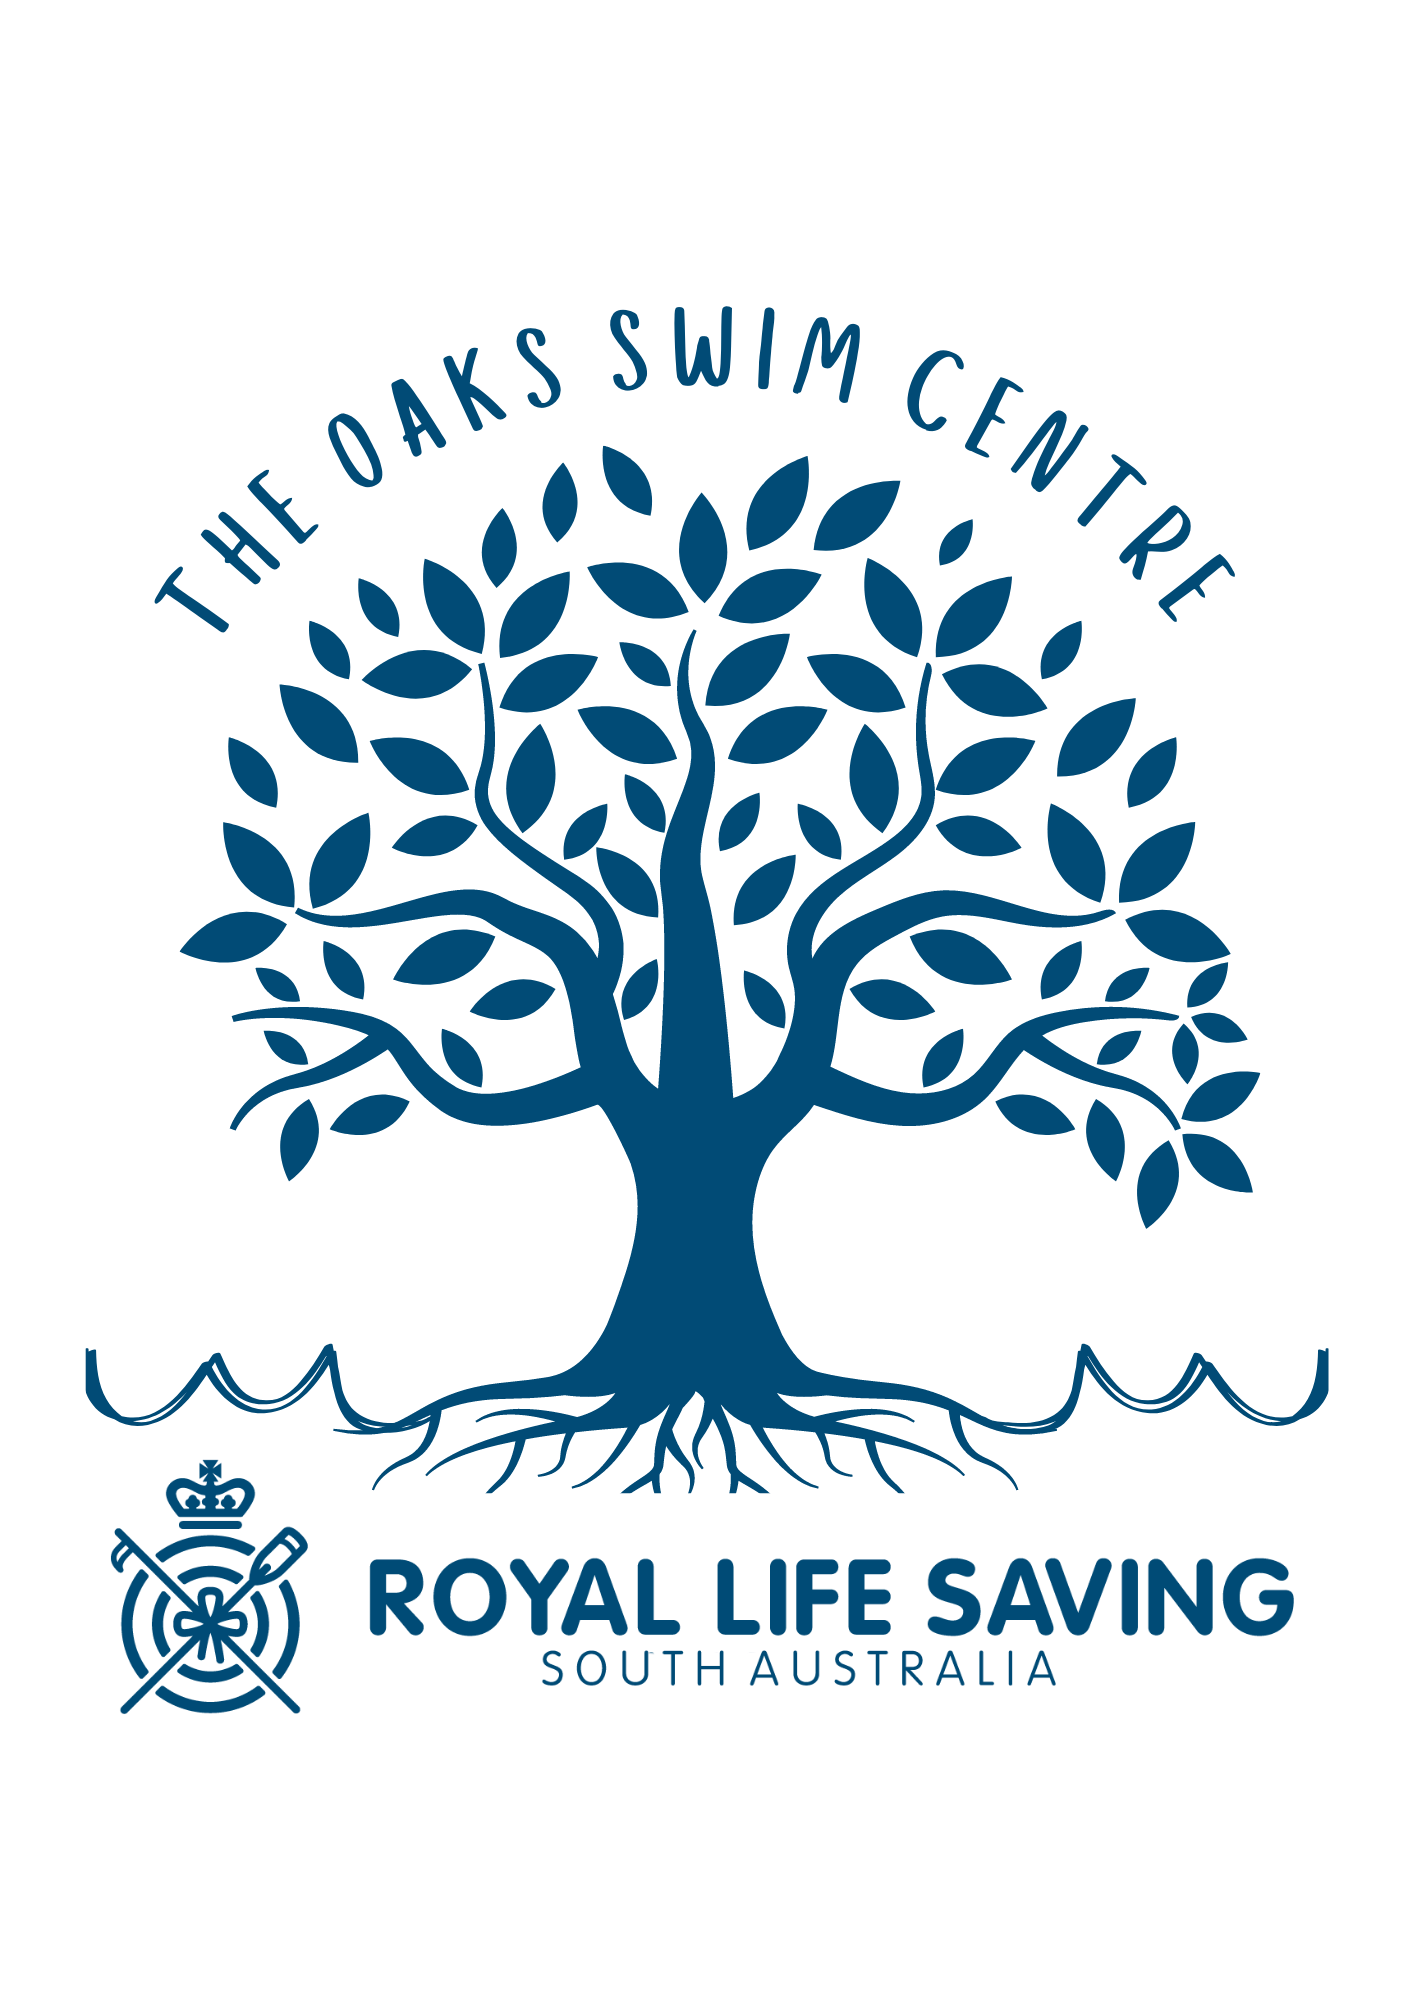 The Oaks Swim Centre